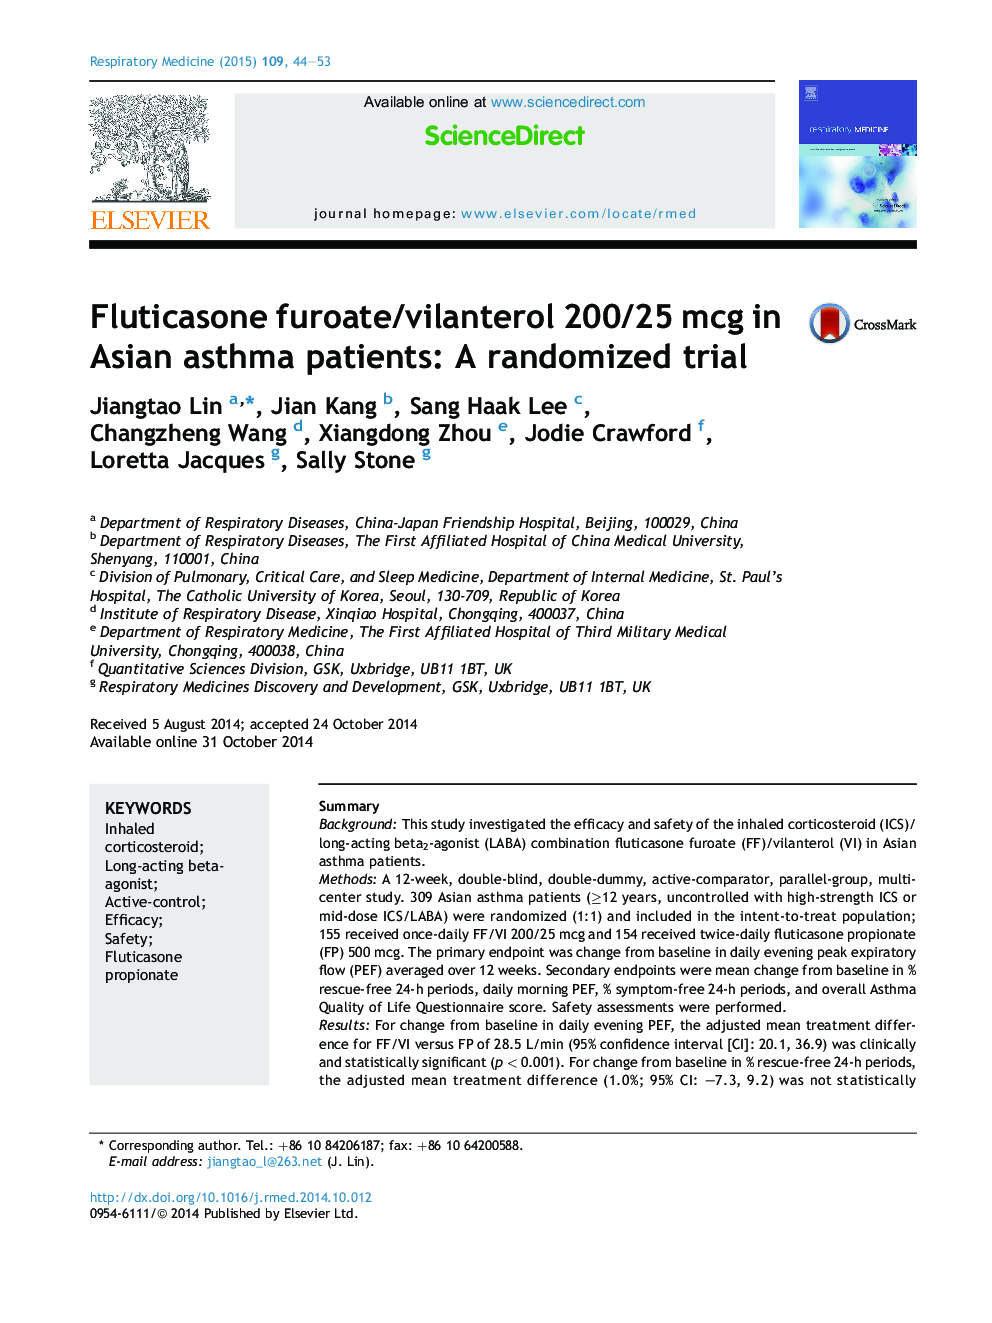 Fluticasone furoate/vilanterol 200/25Â mcg in Asian asthma patients: A randomized trial